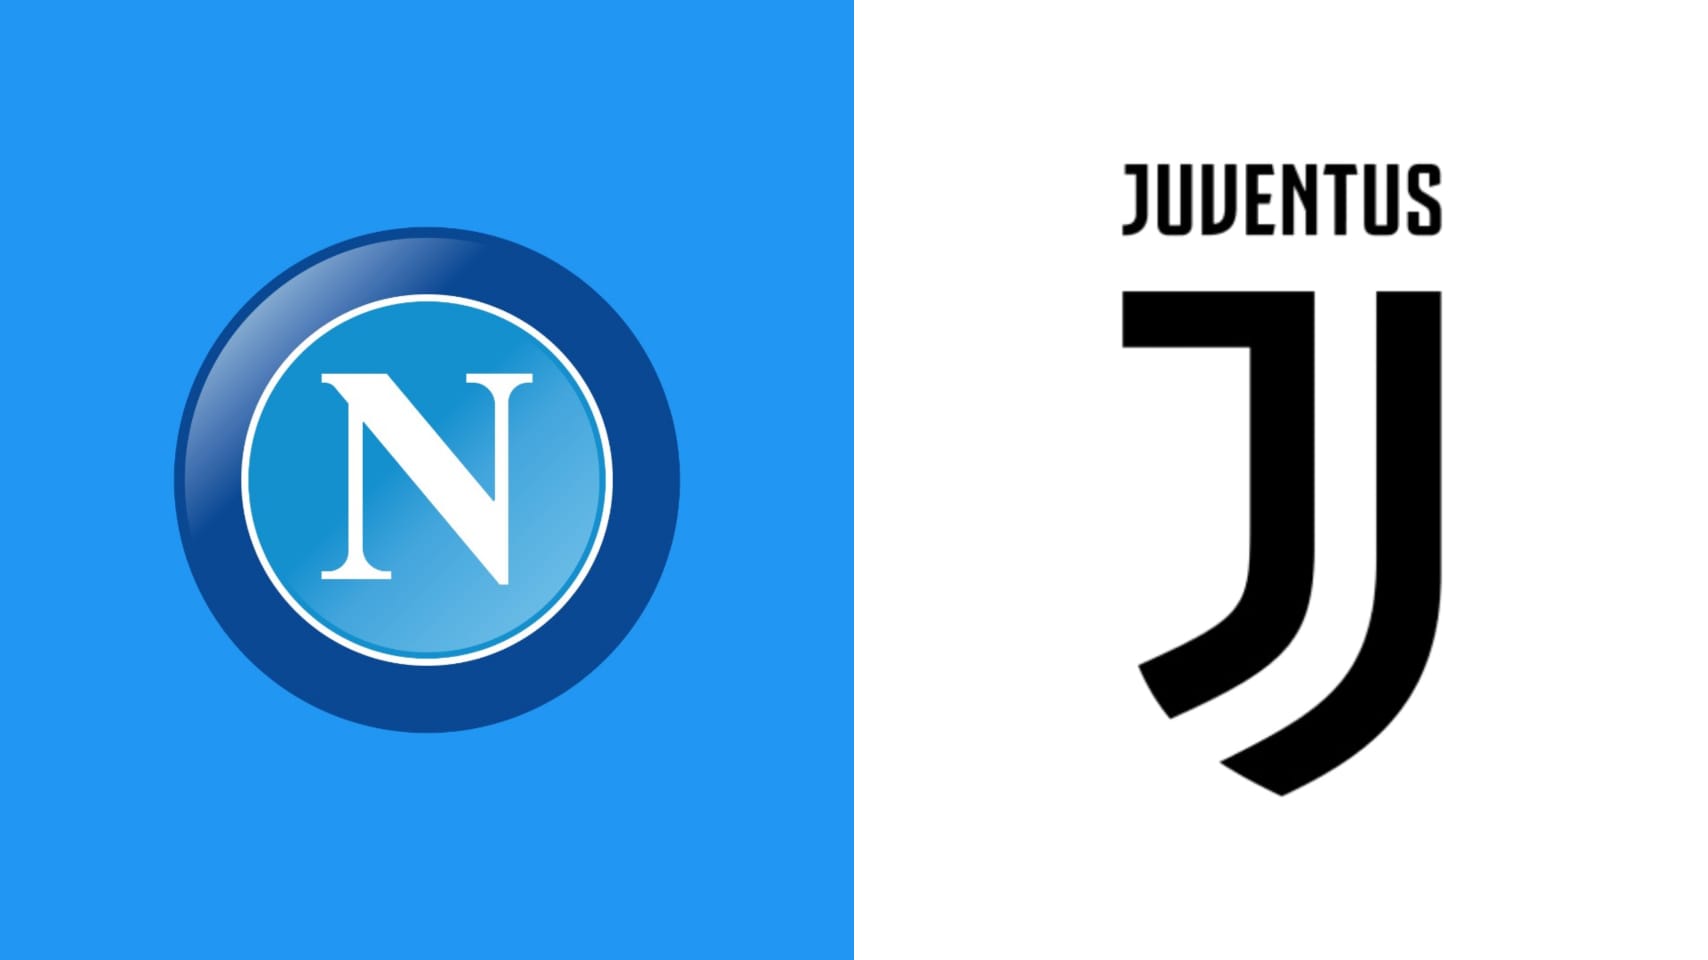 The logos of Napoli and Juventus